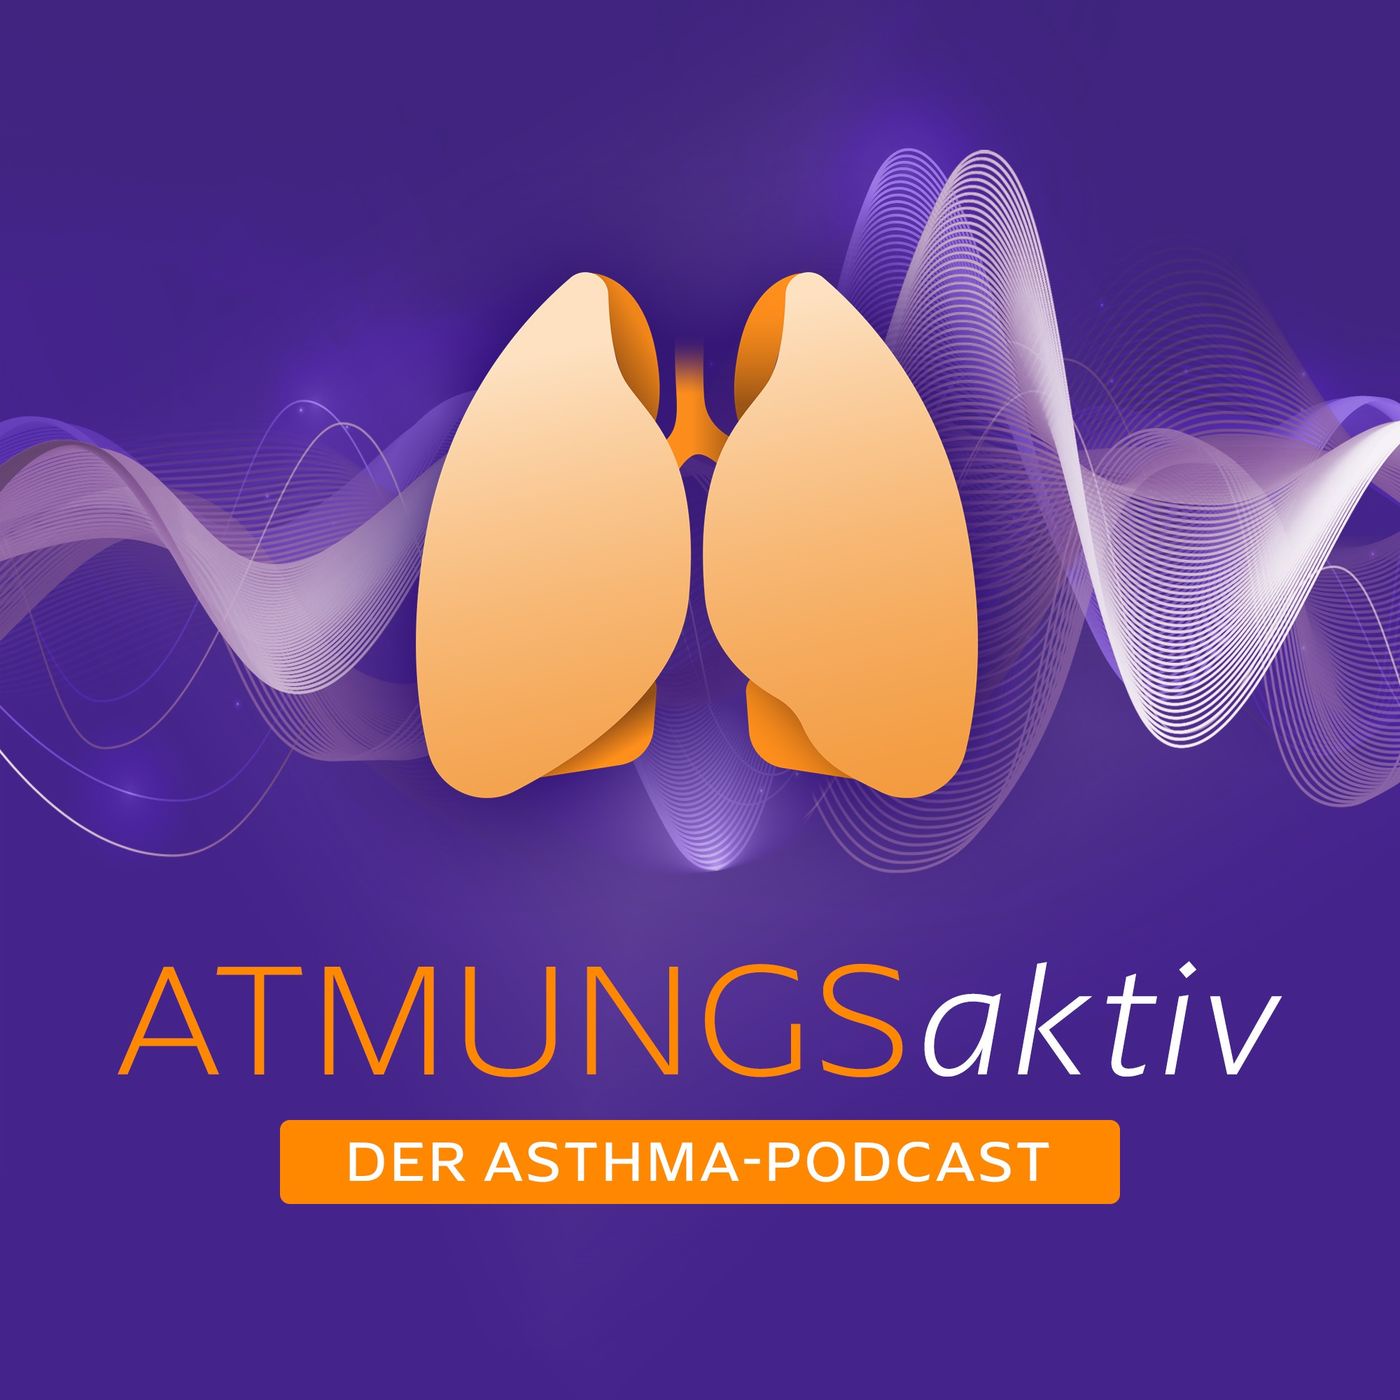 Atmungsaktiv, der Asthma-Podcast